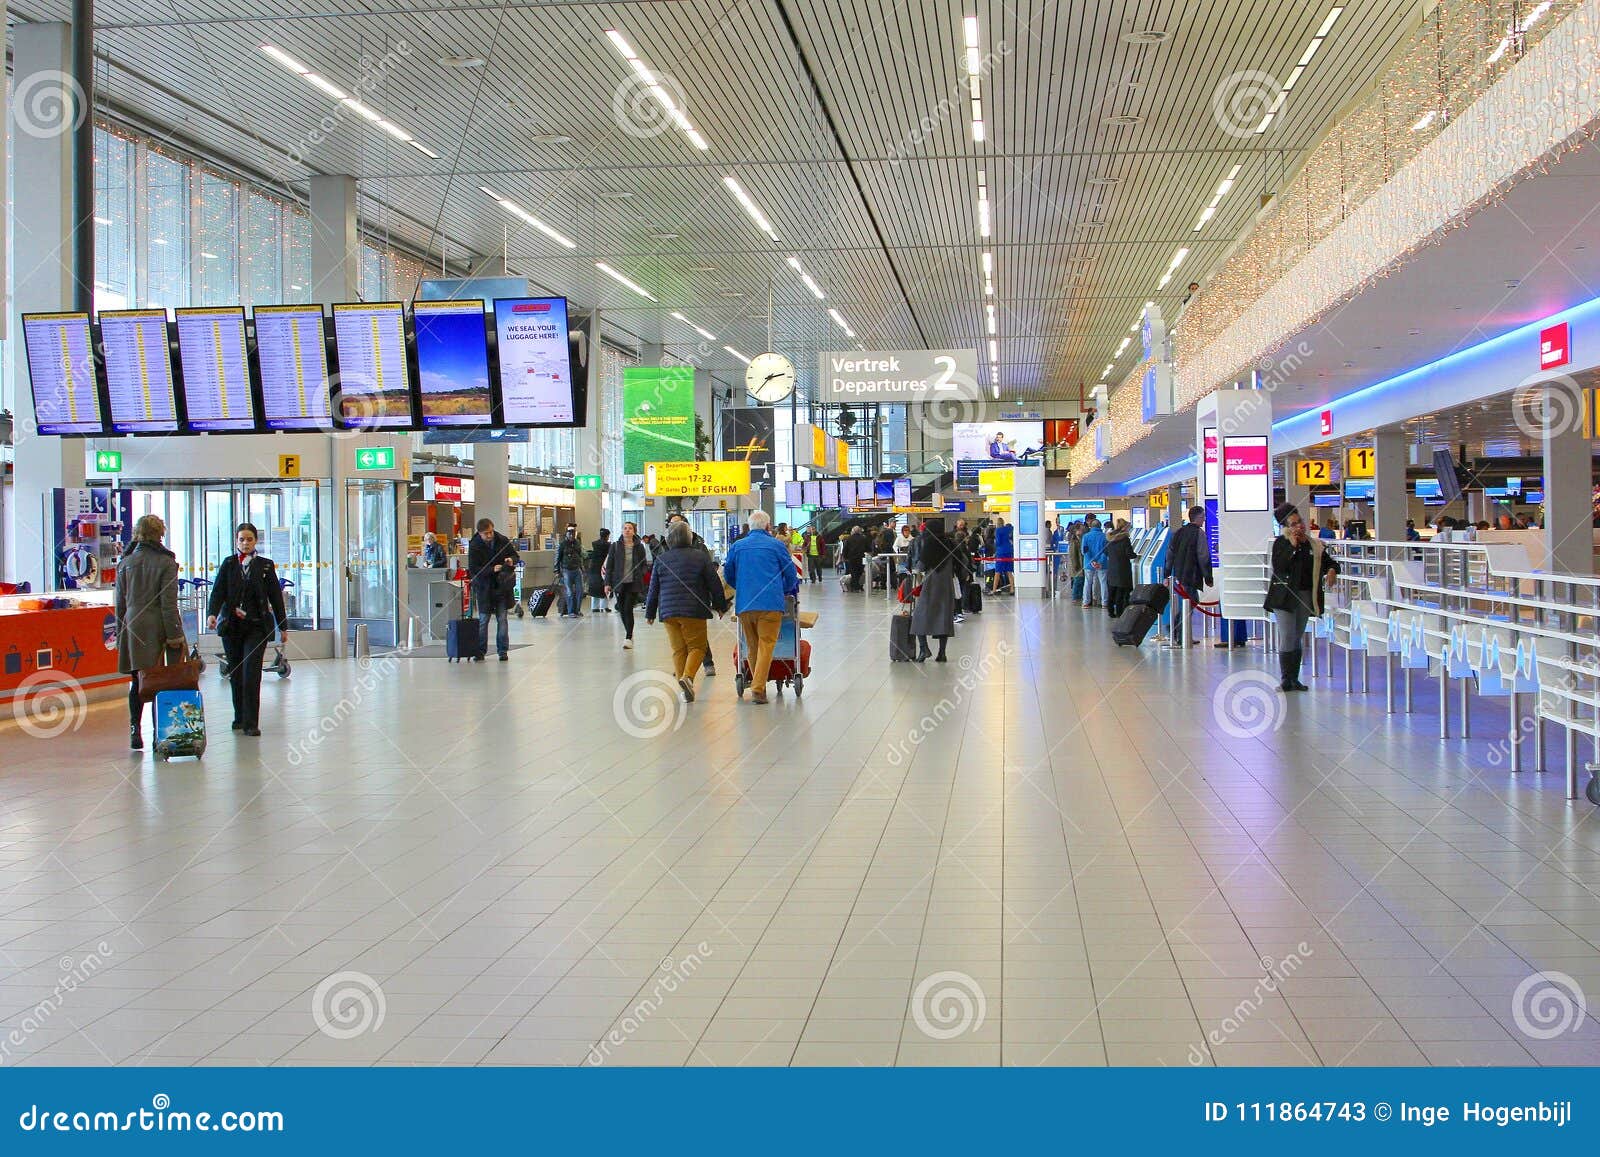 Amsterdam Schiphol Airport January 2018 Travelers Bagage Self